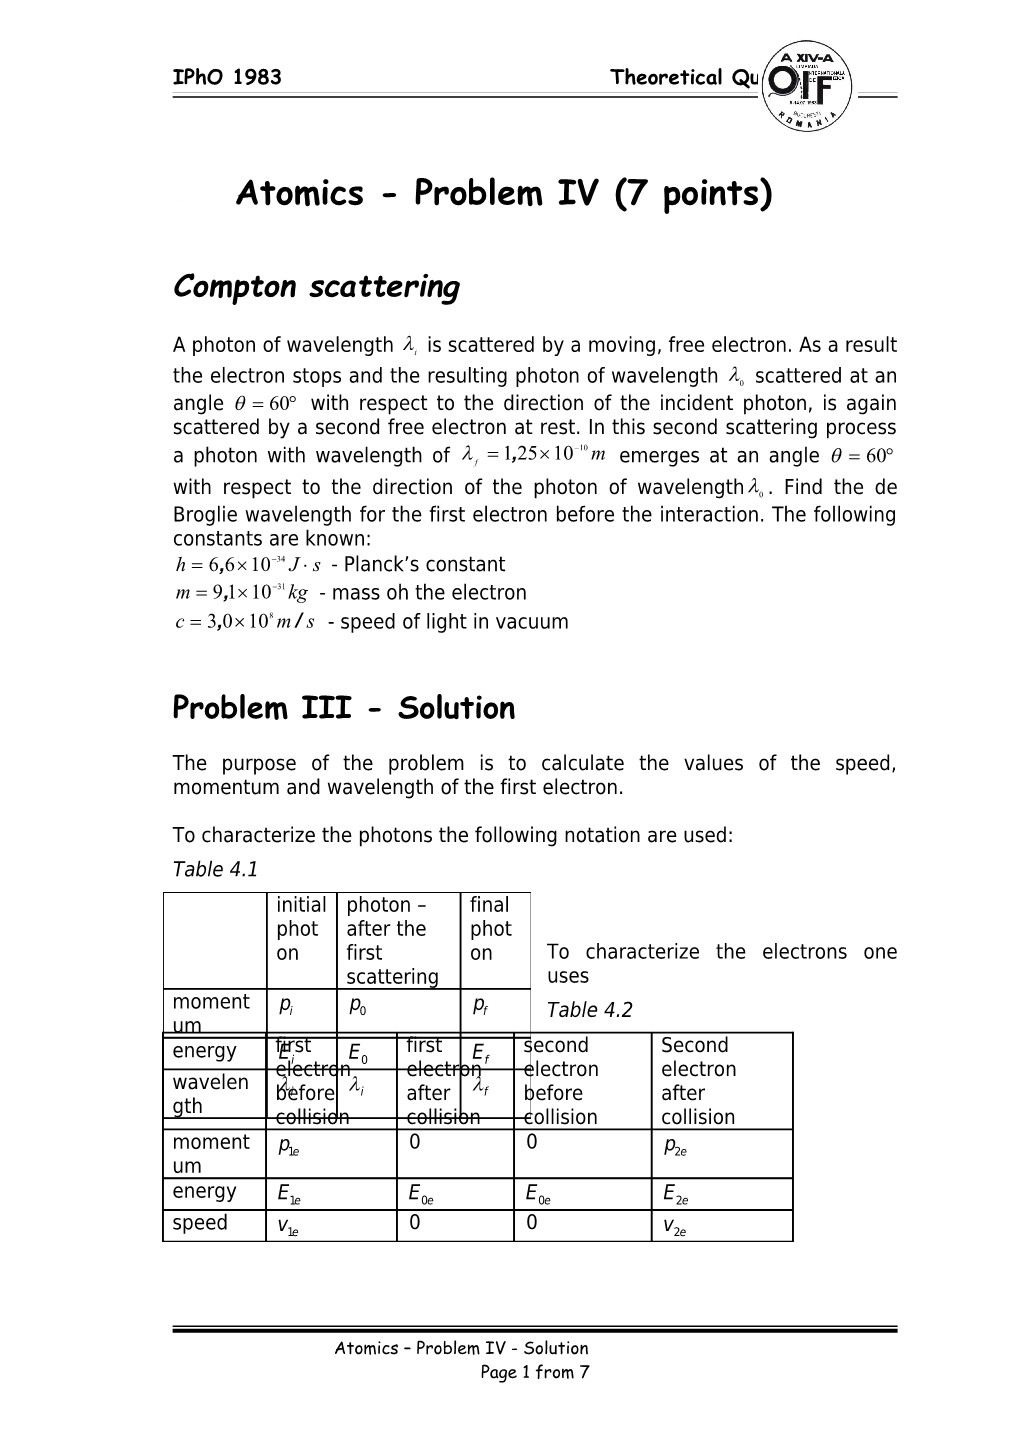 4.Atomics - Problem IV (7Points)